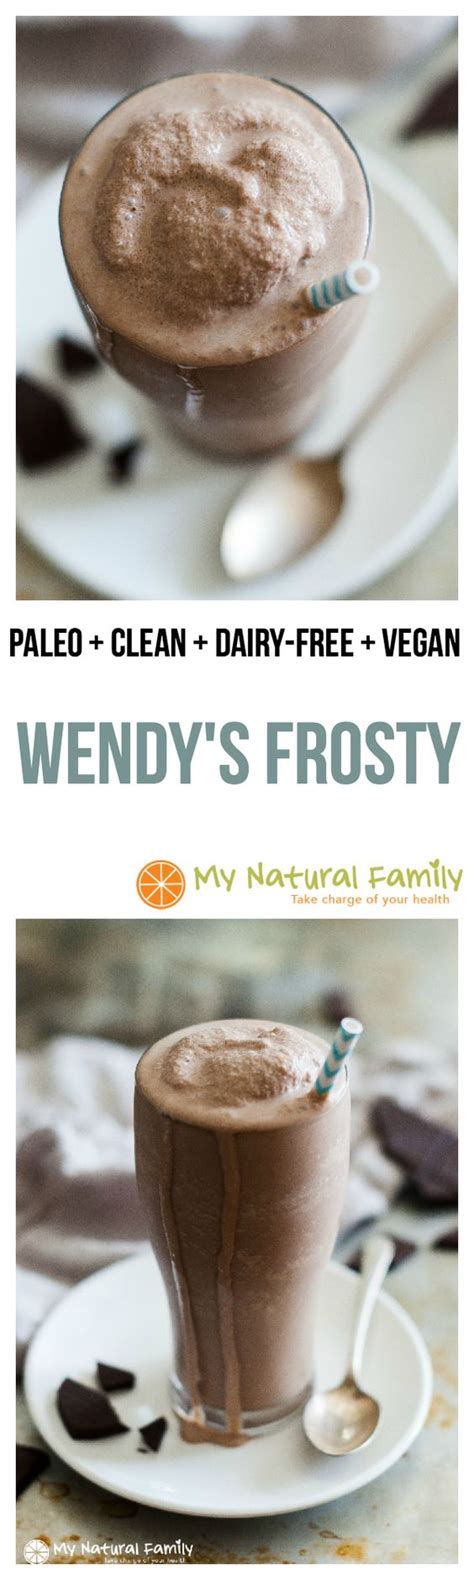 Wendys Free Frostys 2016